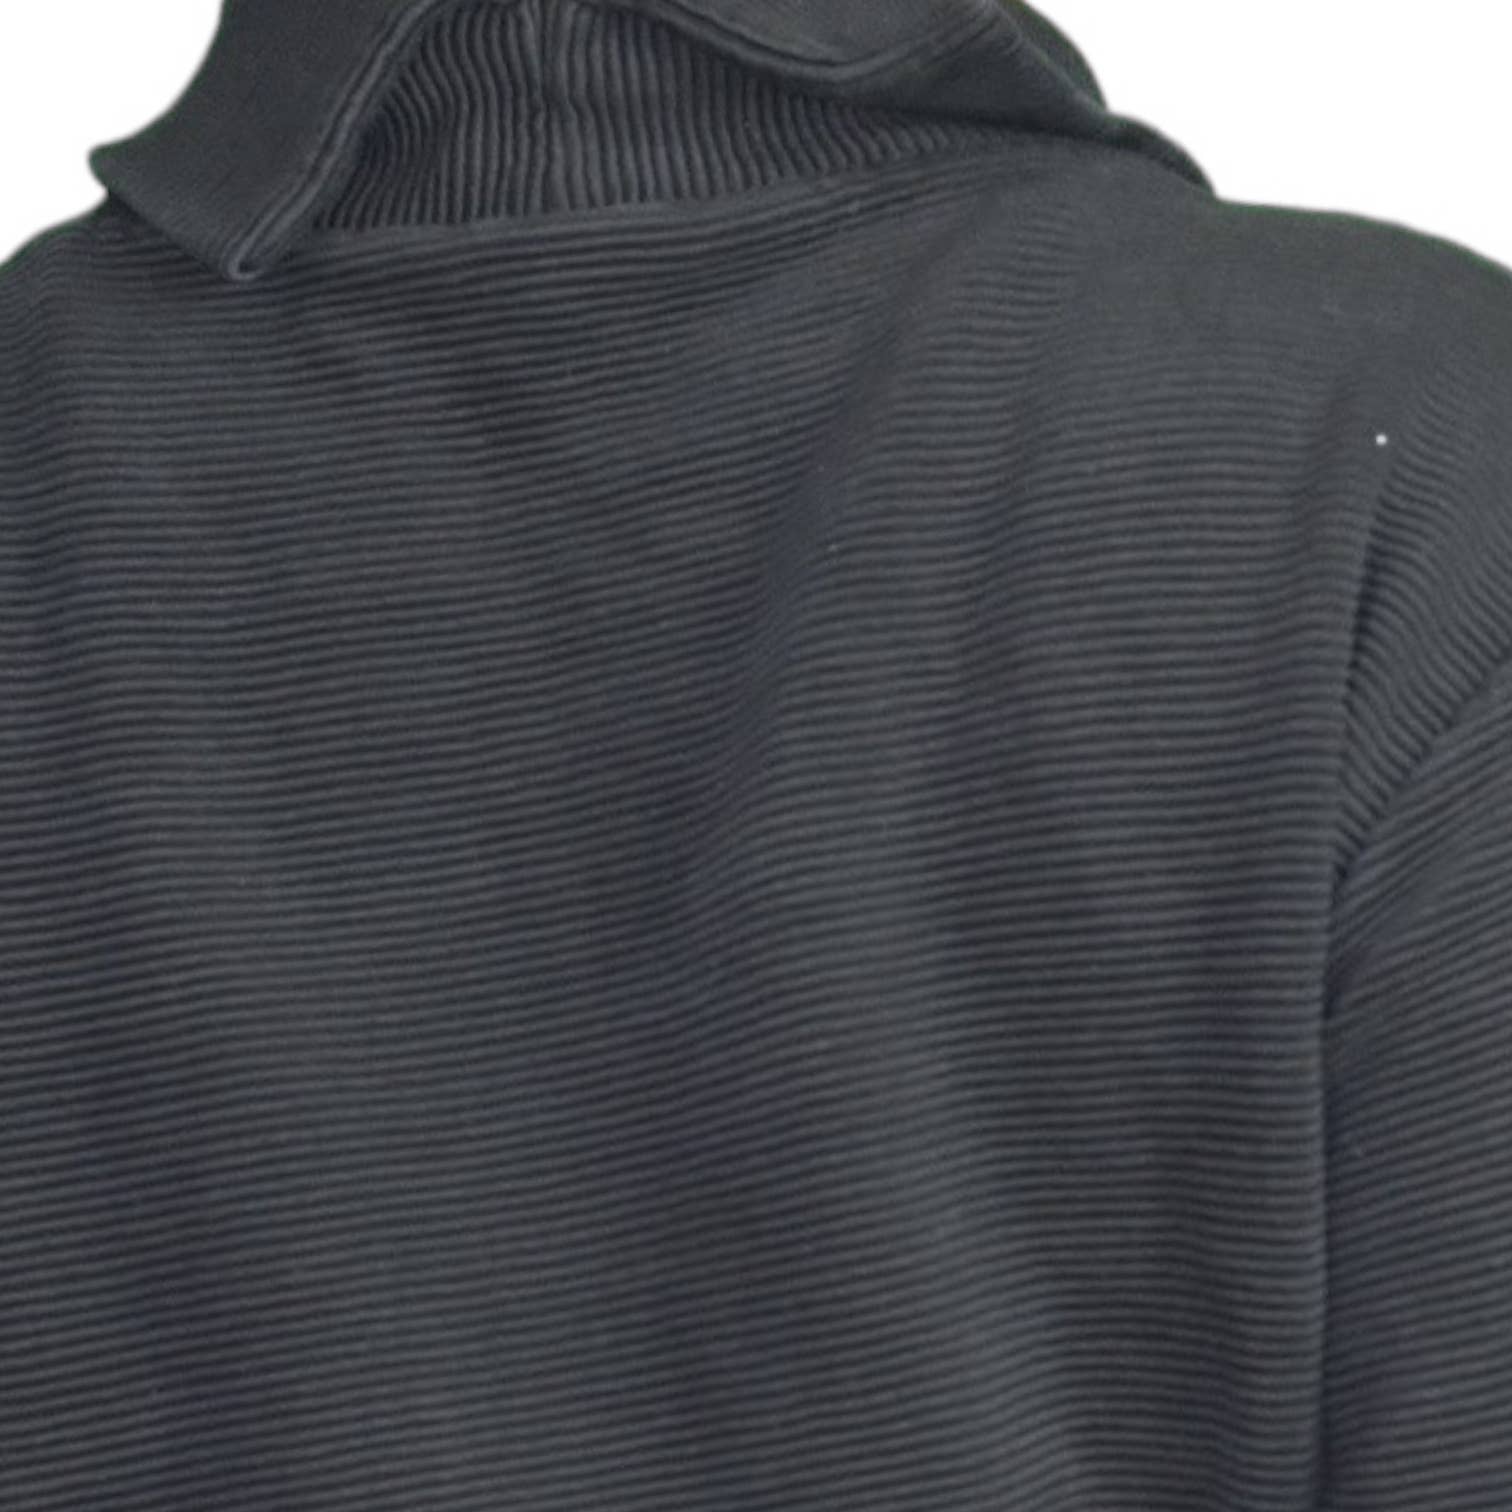 Varley Simon Turtleneck Sweatshirt Black Ottoman Rib Boxy Rolled Neck Side Zip Size Medium